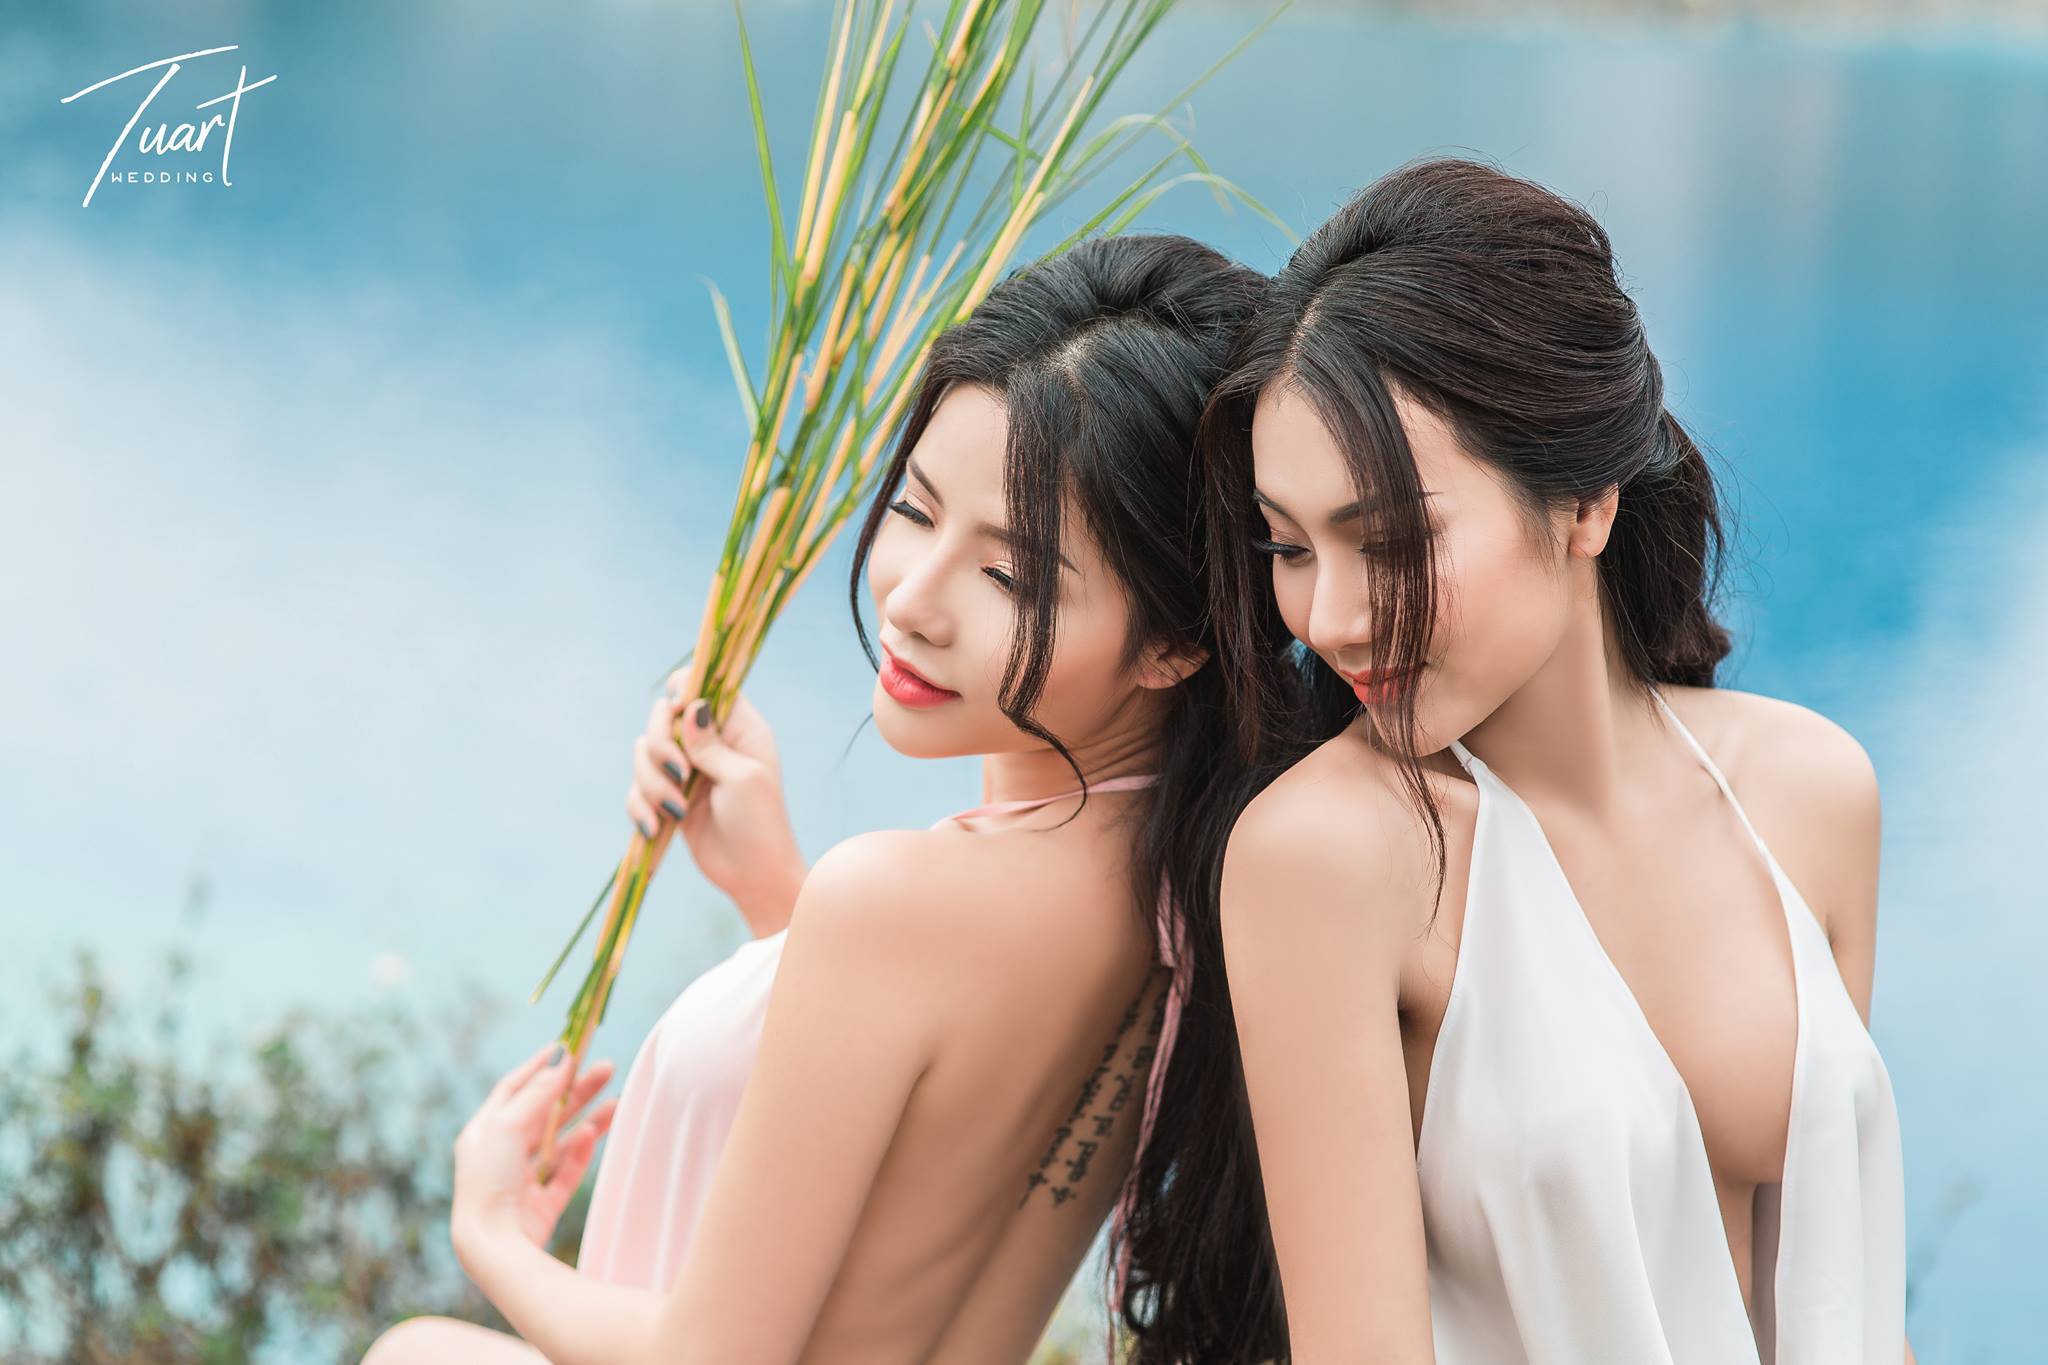 Vietnam model paradise